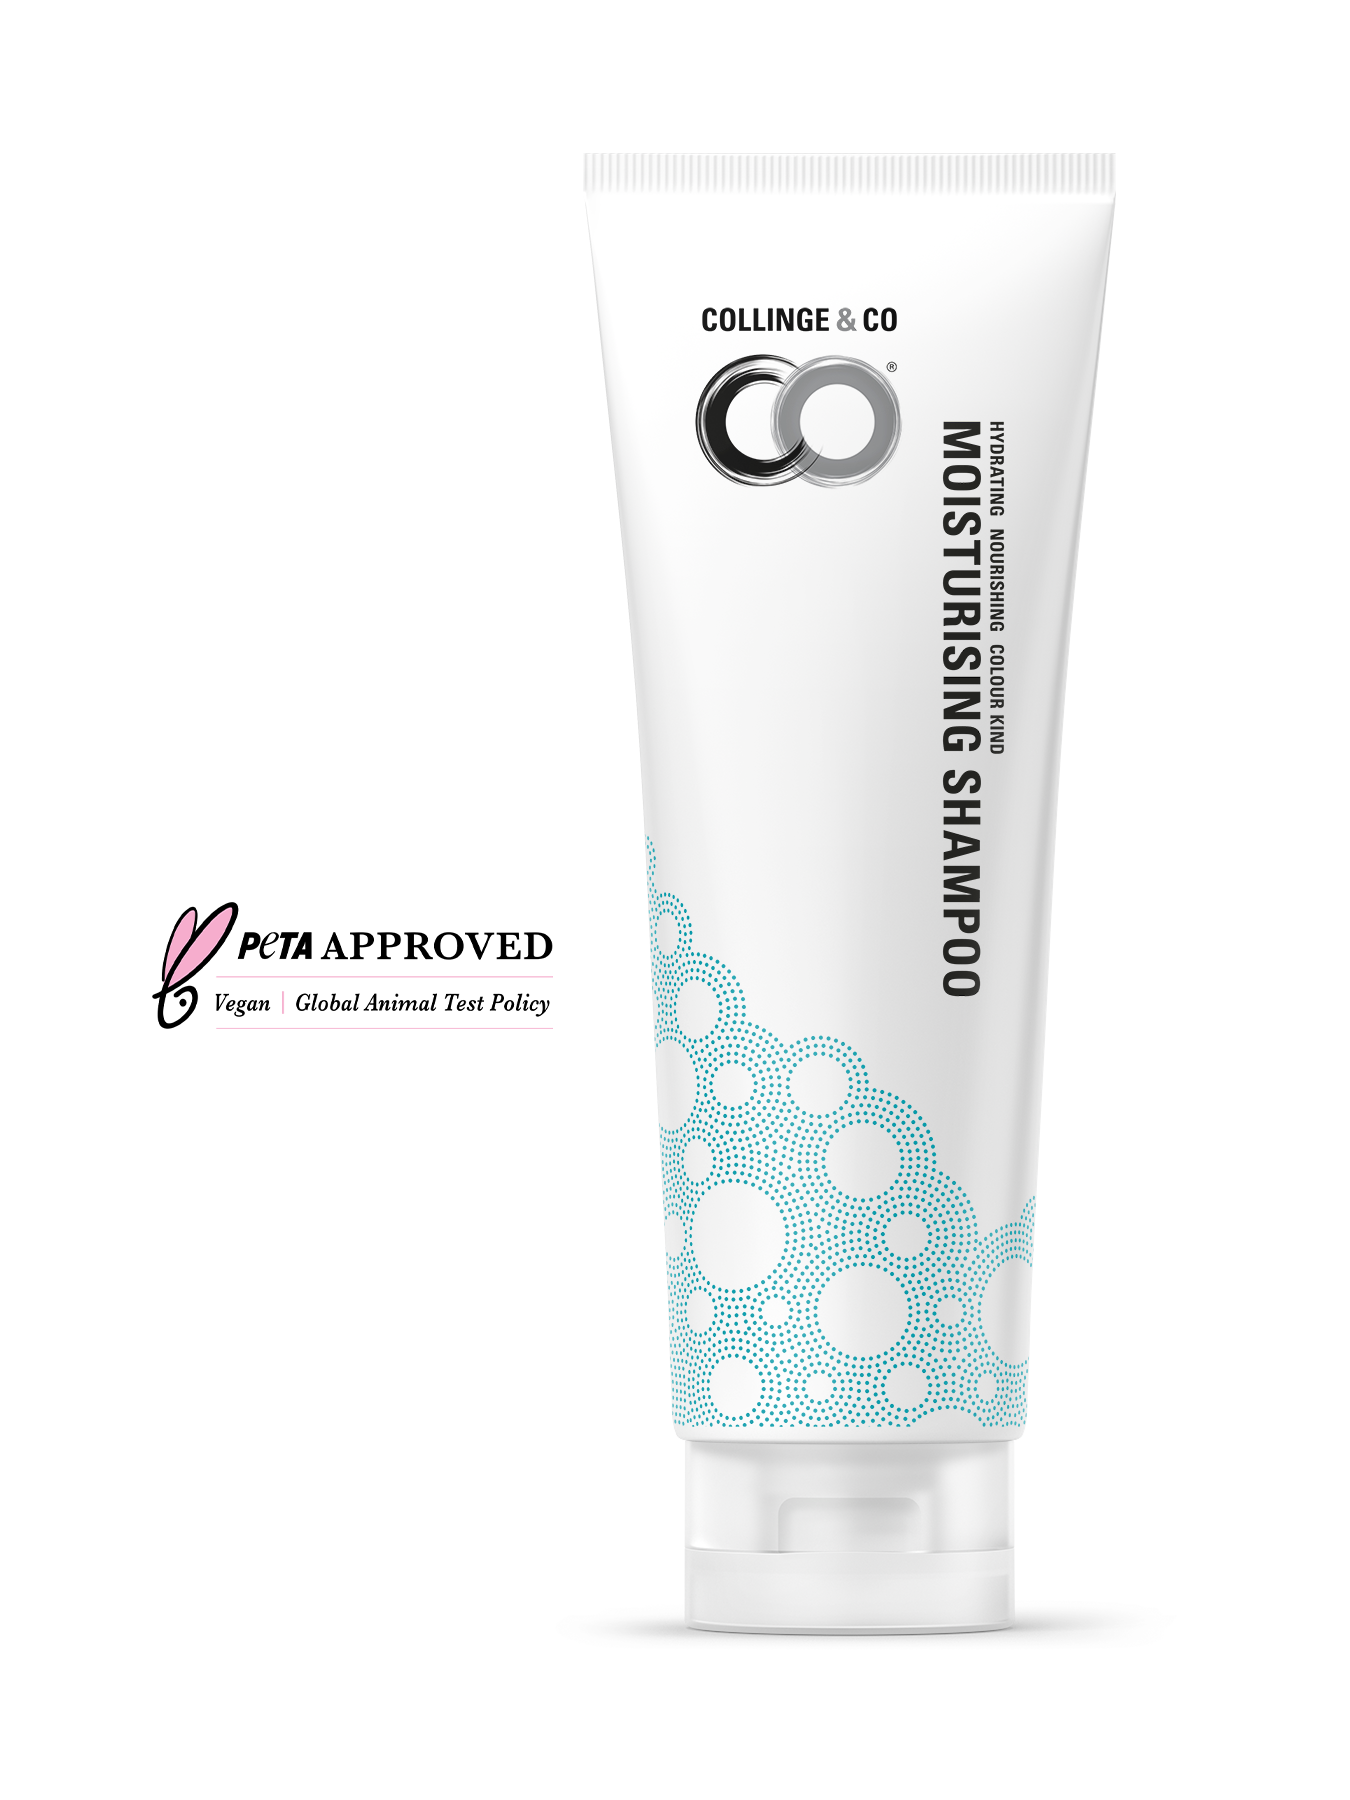 Collinge & Co Moisturising Shampoo PeTA accreditation